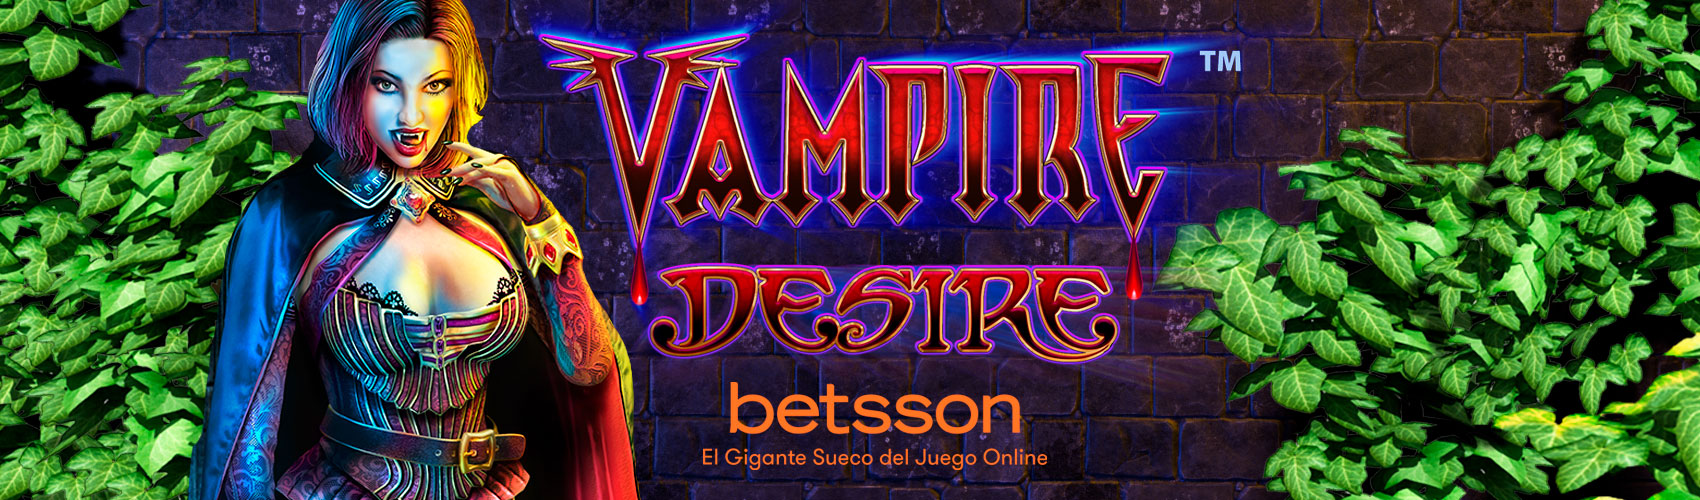 Vampire Desire, la aventura vampírica de Betsson para este Halloween